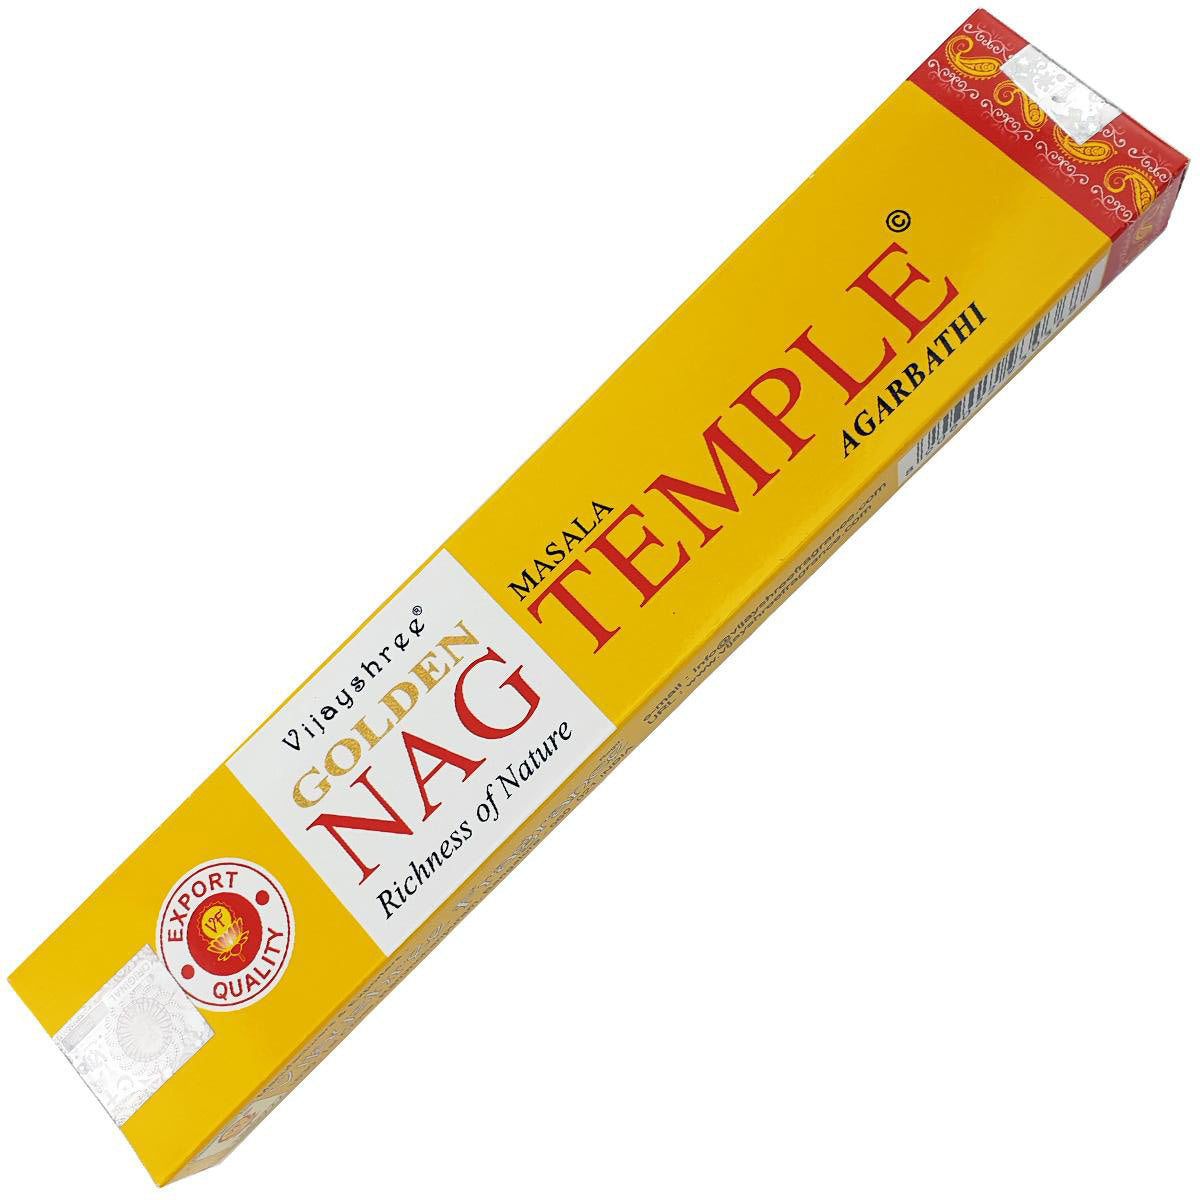 Incense Temple 15g